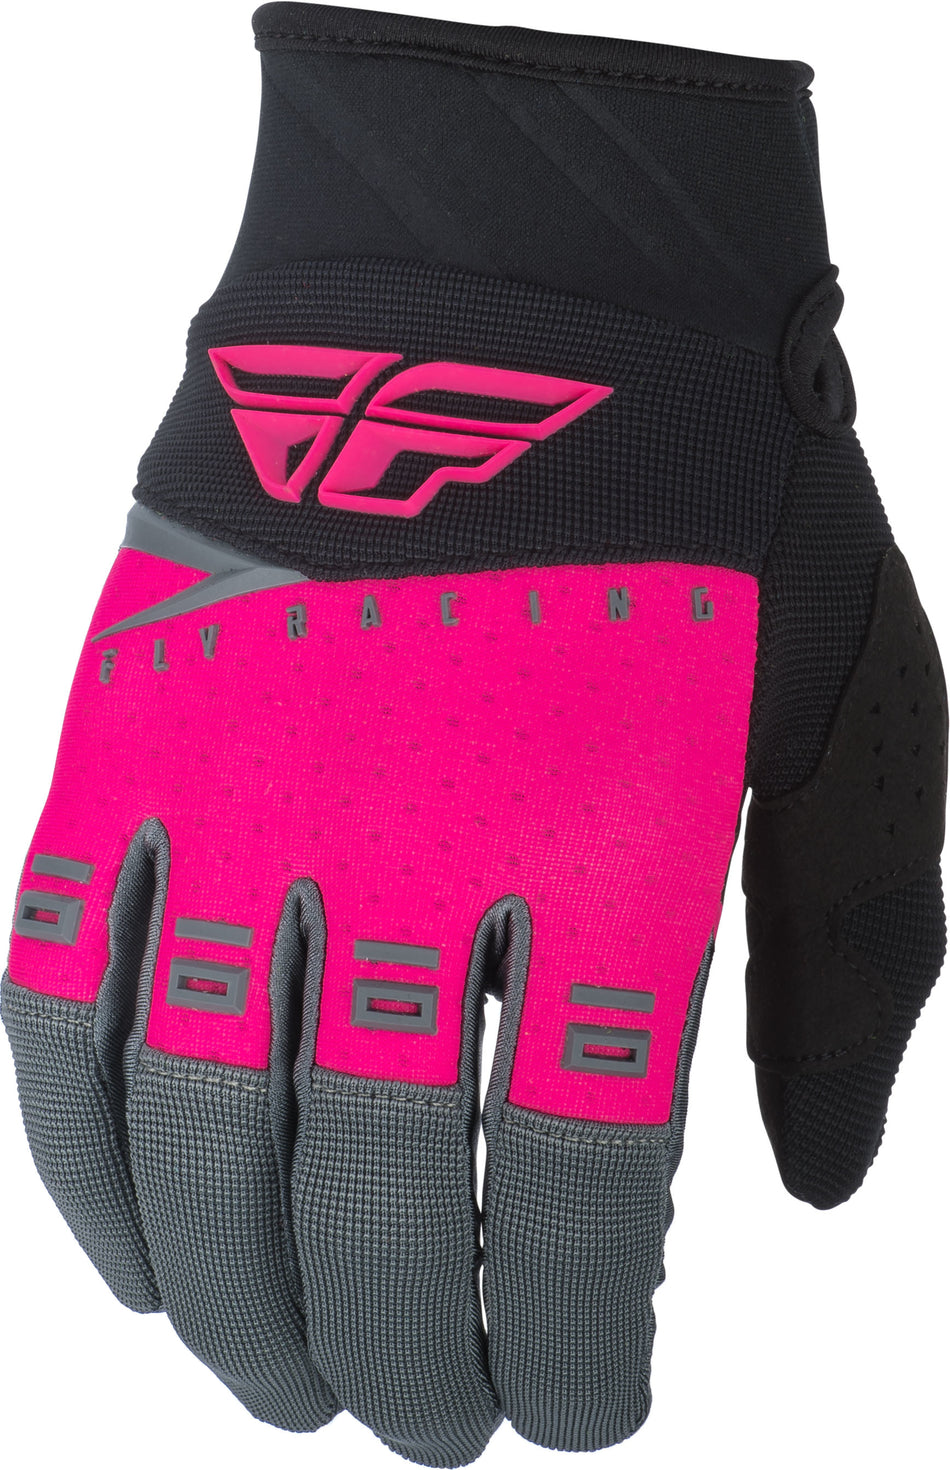 FLY RACING F-16 Gloves Neon Pink/Black/Grey Sz 13 372-91813